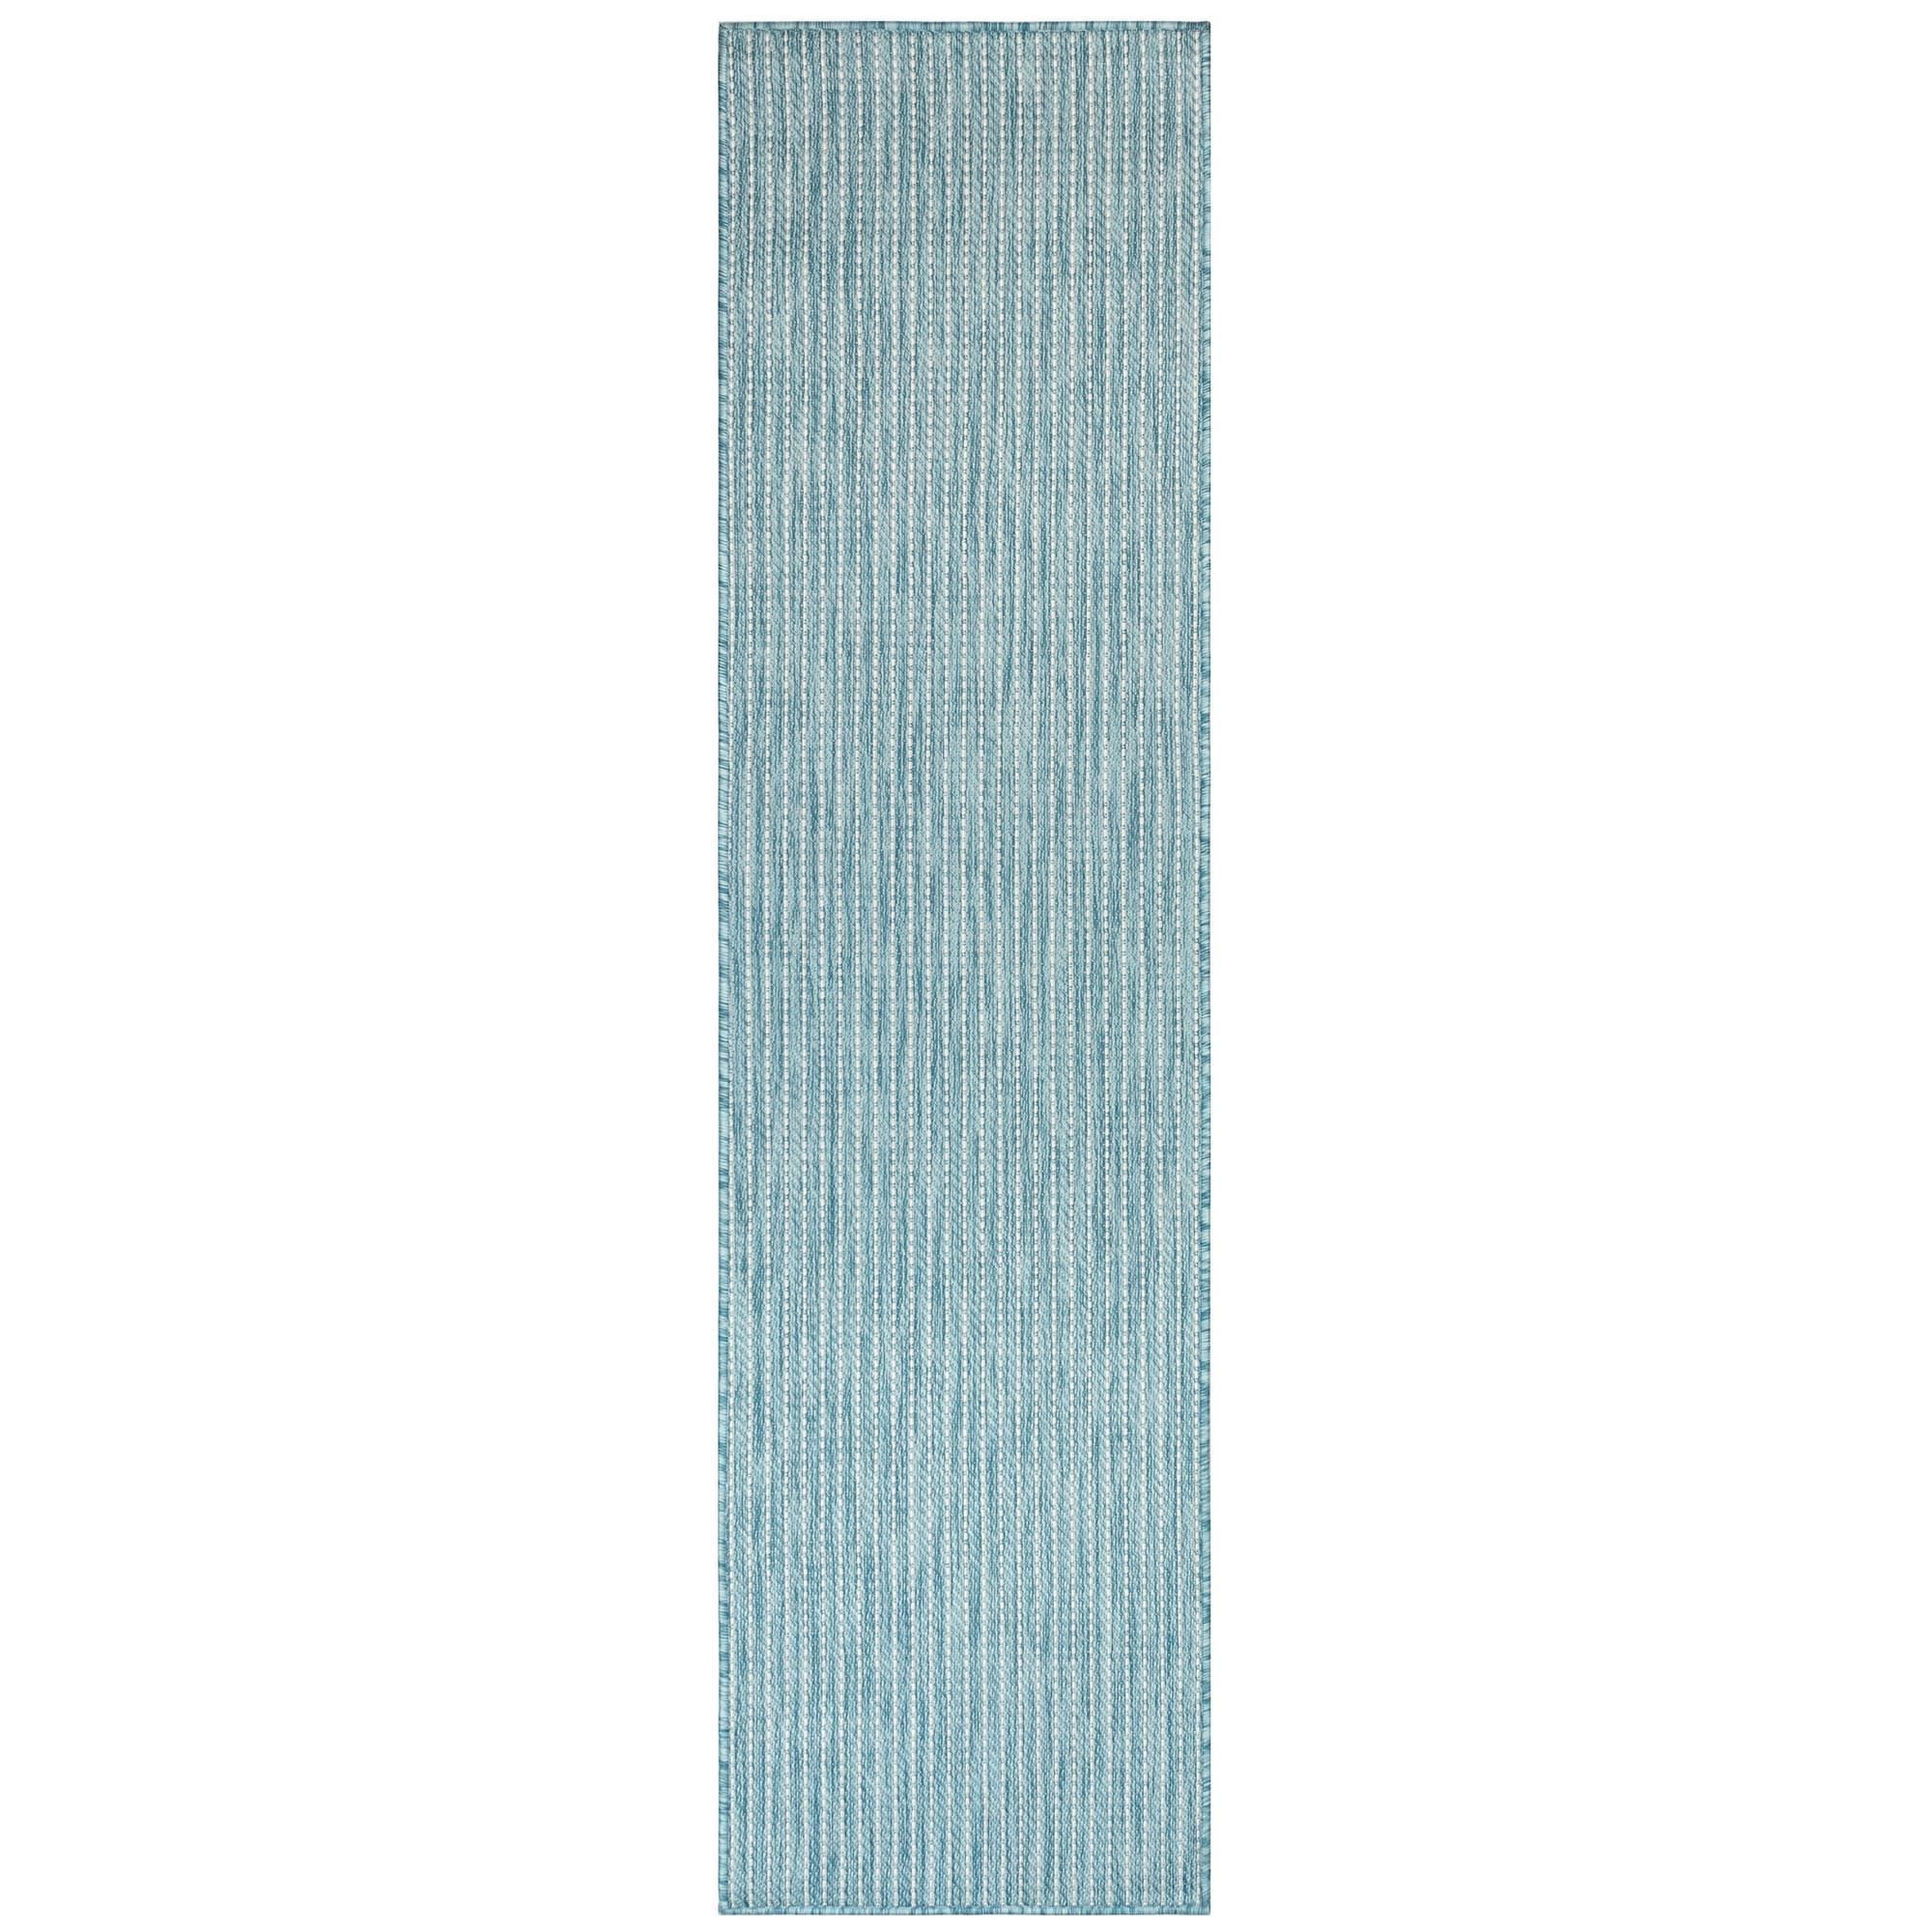 Liora Manne Carmel Textured Striped Indoor/ Outdoor Area Rug